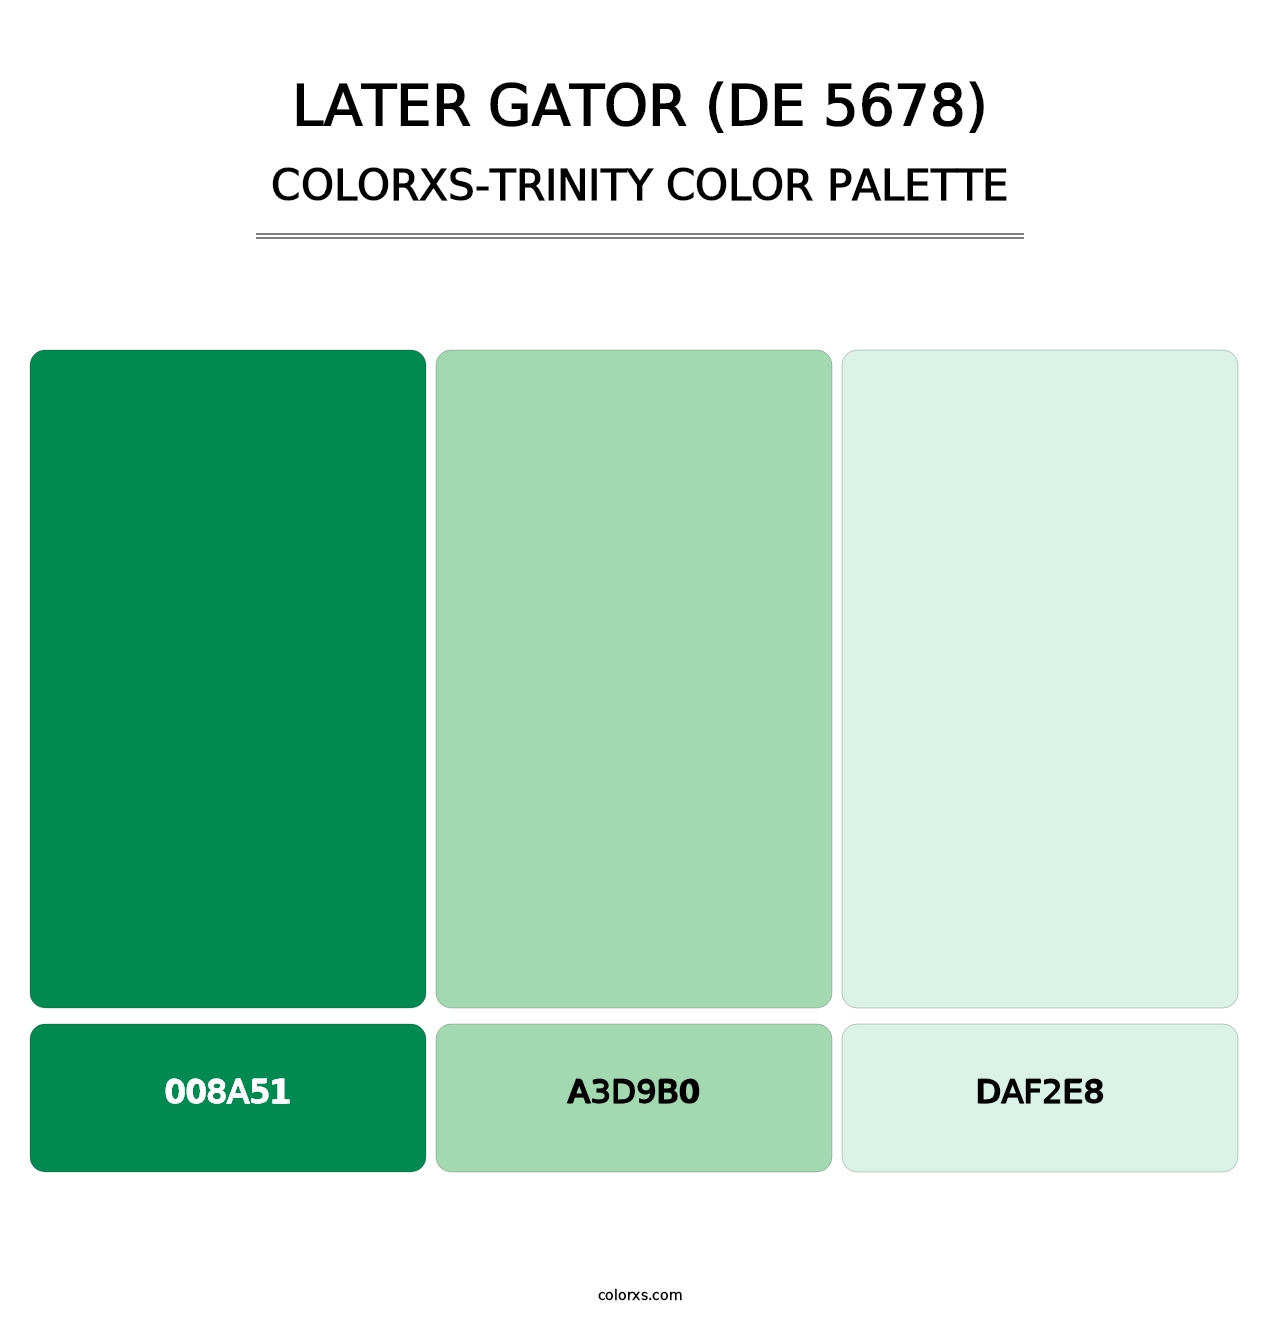 Later Gator (DE 5678) - Colorxs Trinity Palette